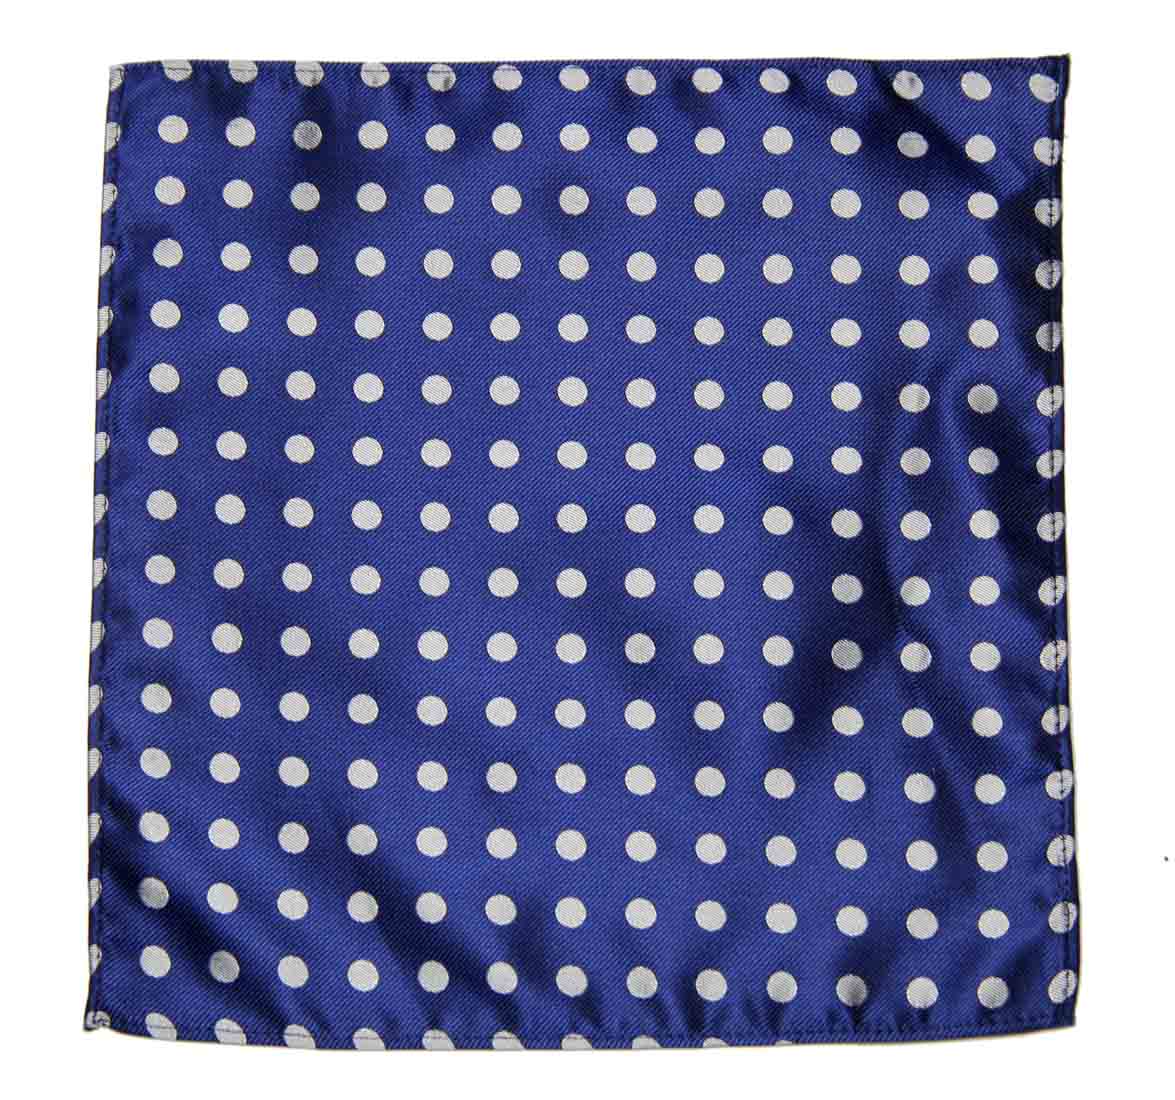 ekSel Pocket Square Navy Blue Gray Polka Dots Silk Blend Men's